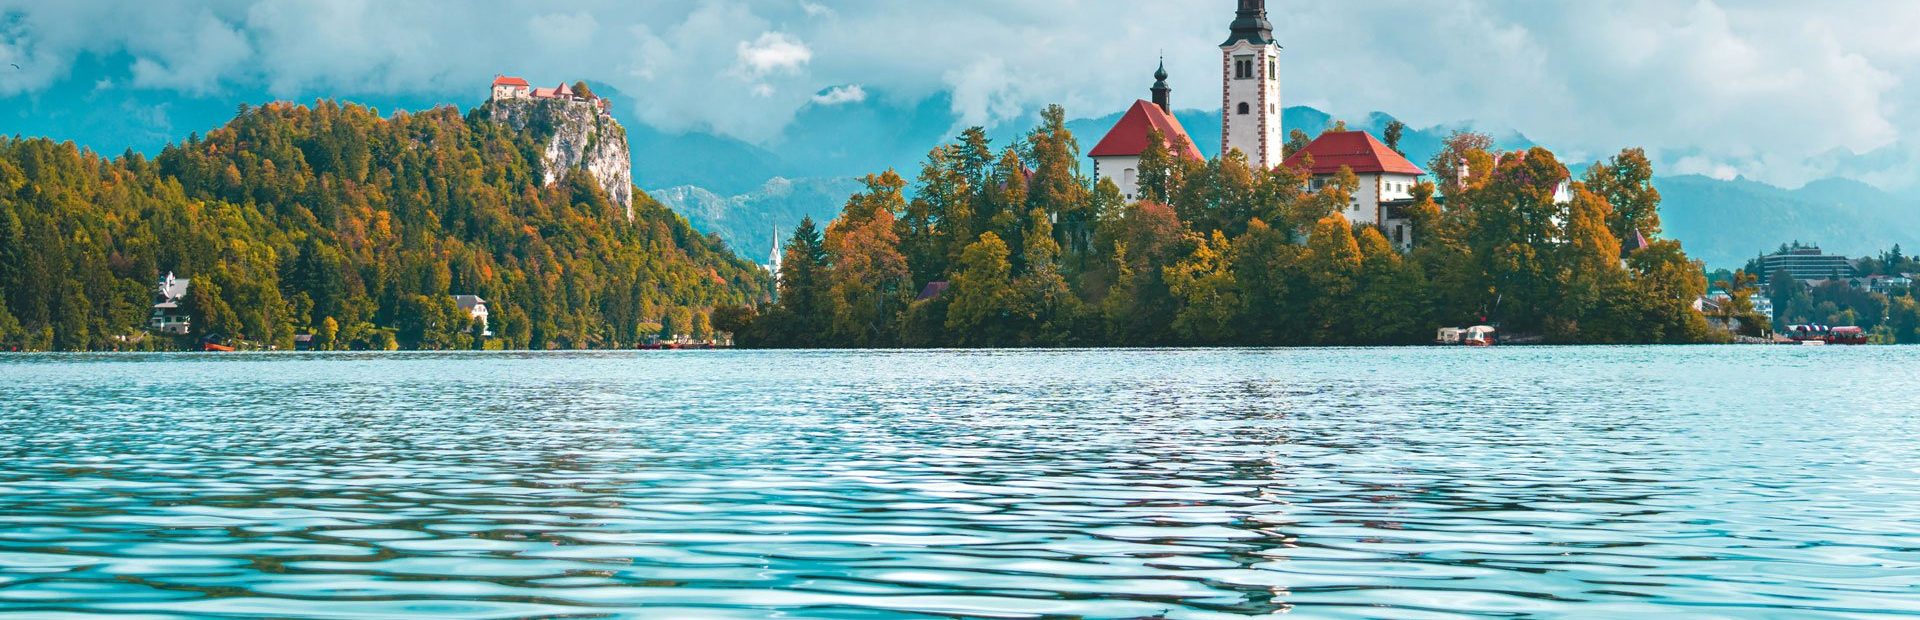 Bled island Slovenia